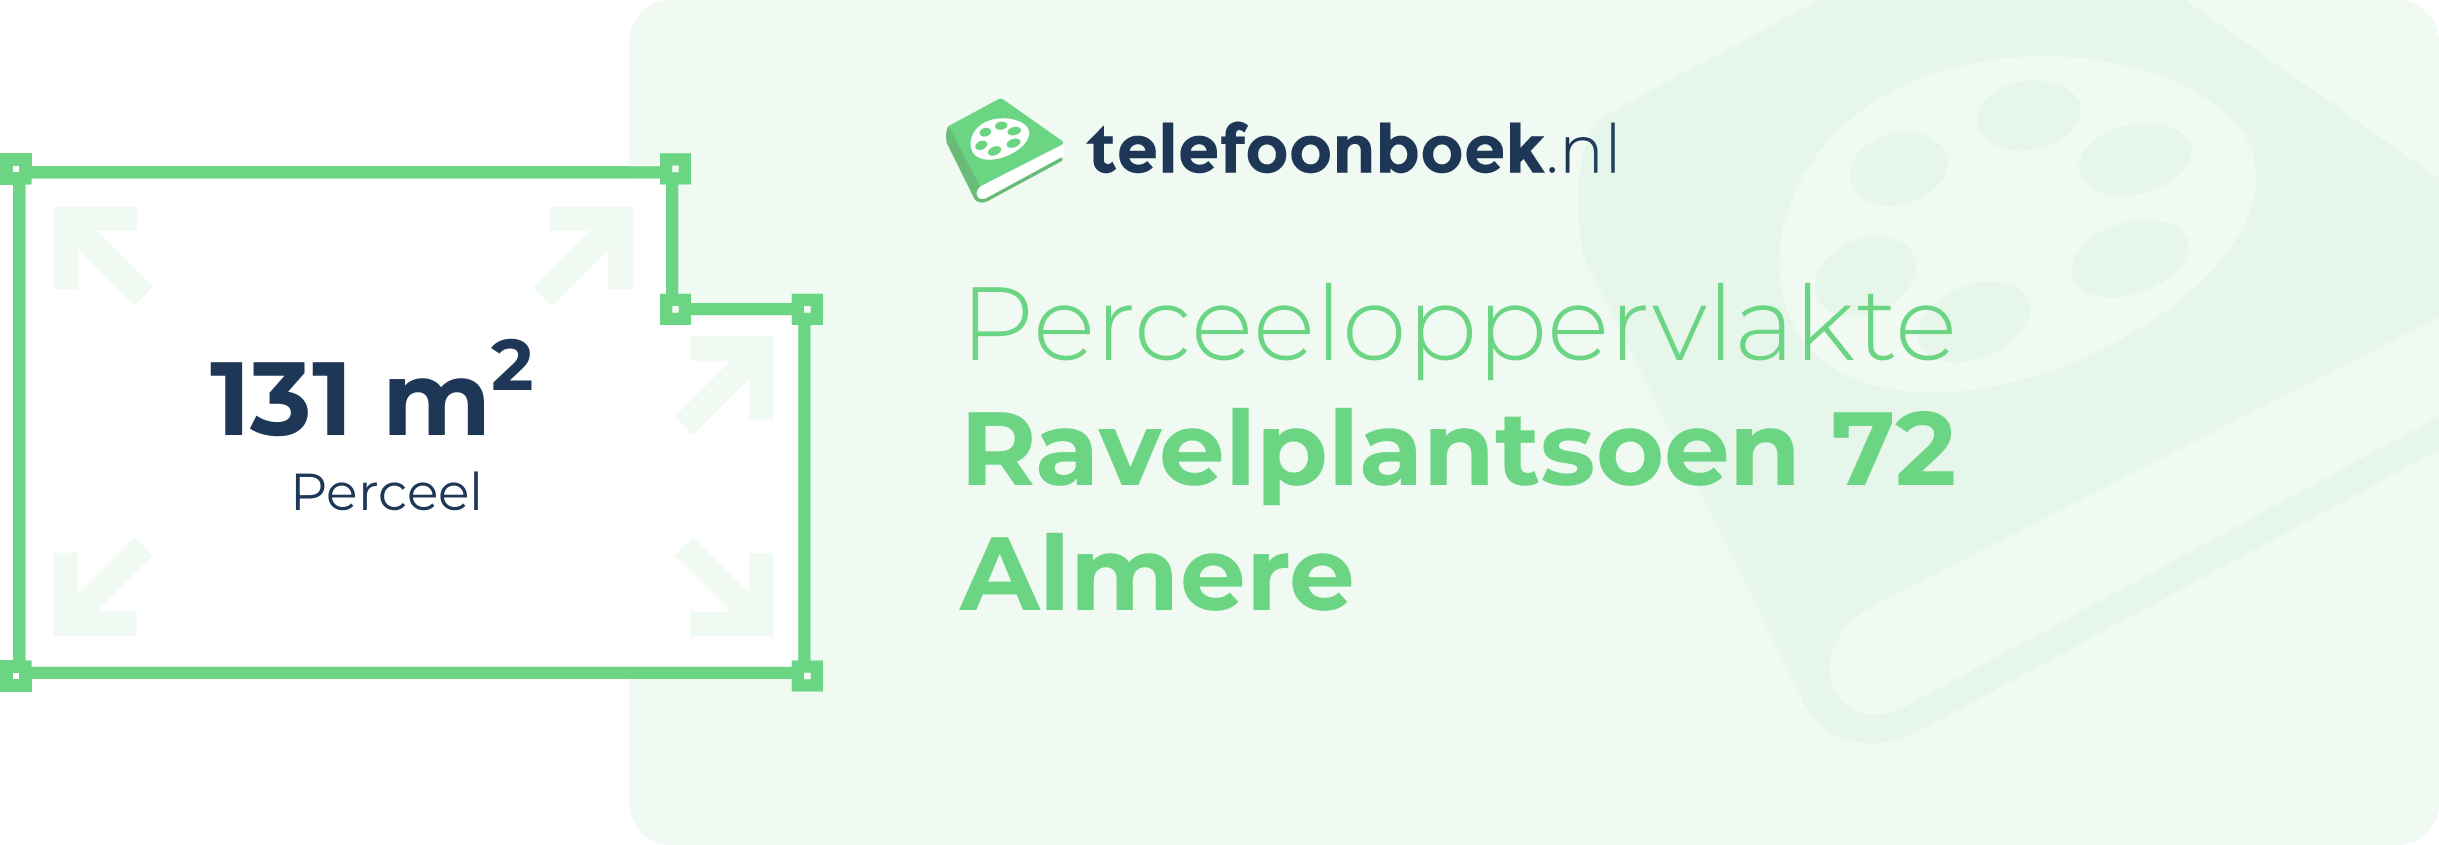 Perceeloppervlakte Ravelplantsoen 72 Almere